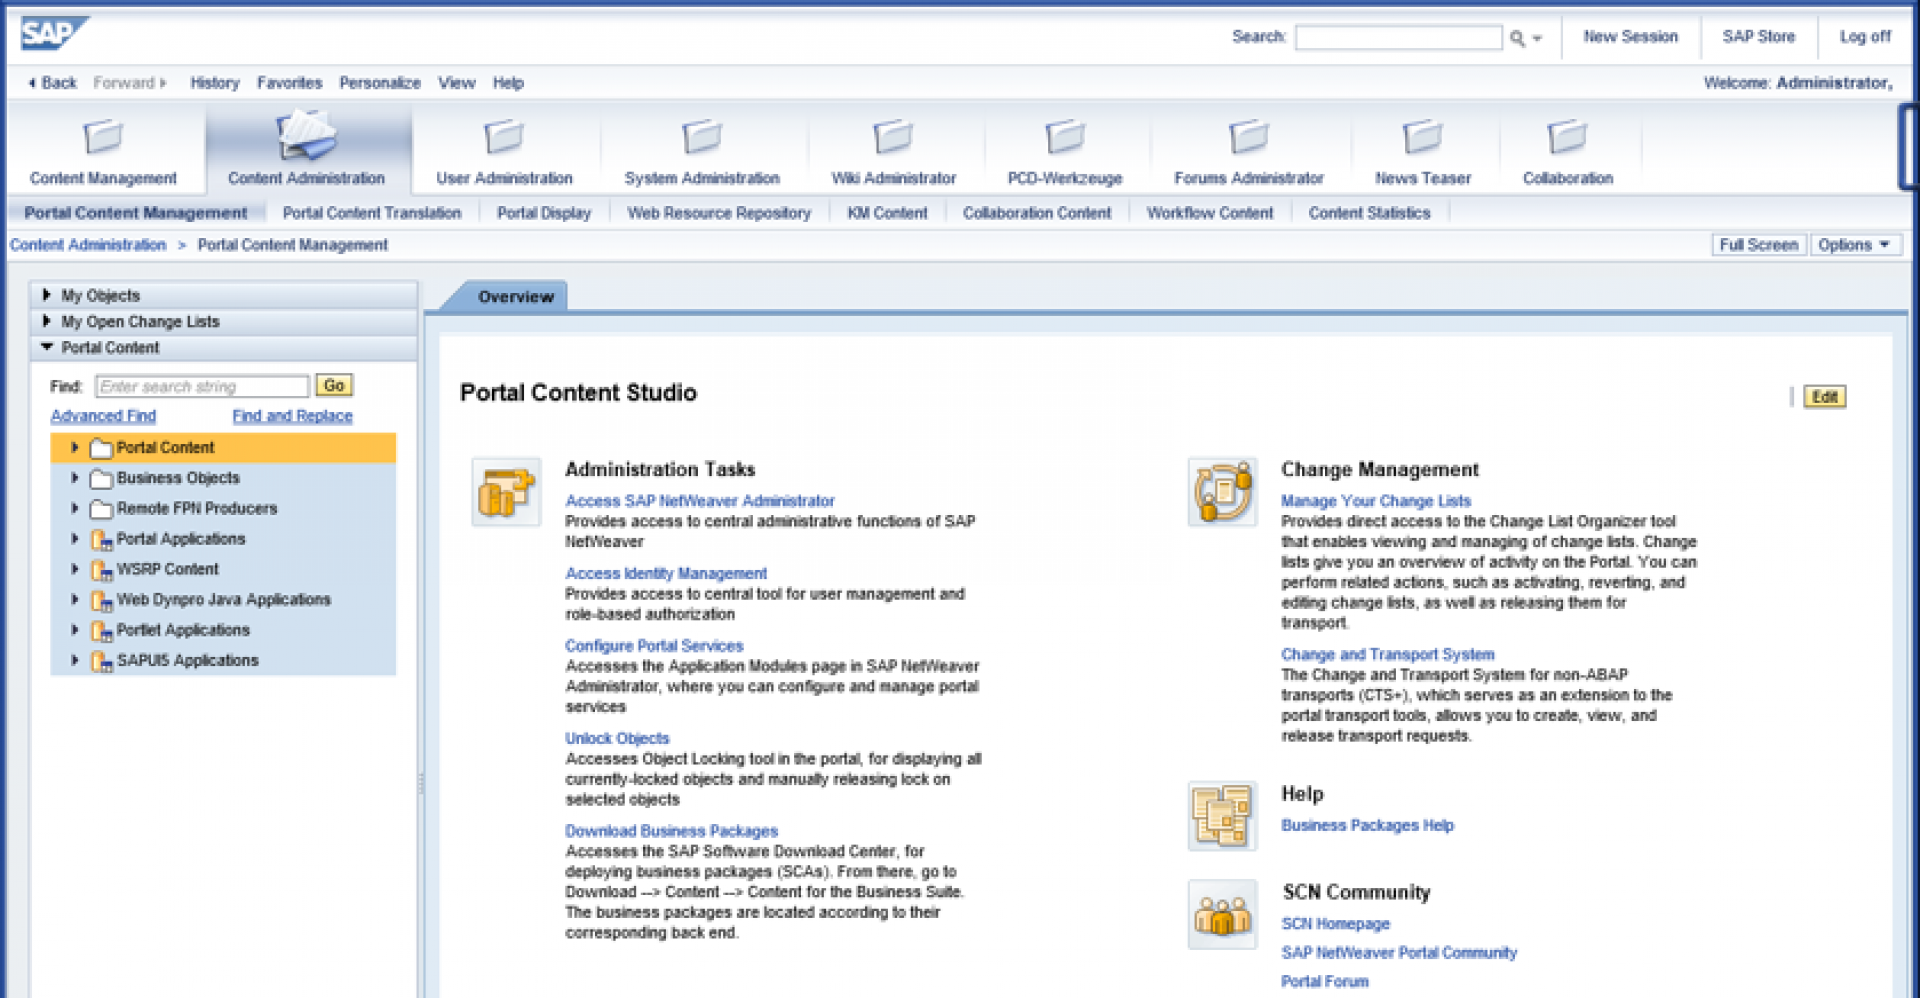 Portal Classic: User Experience (SAP)